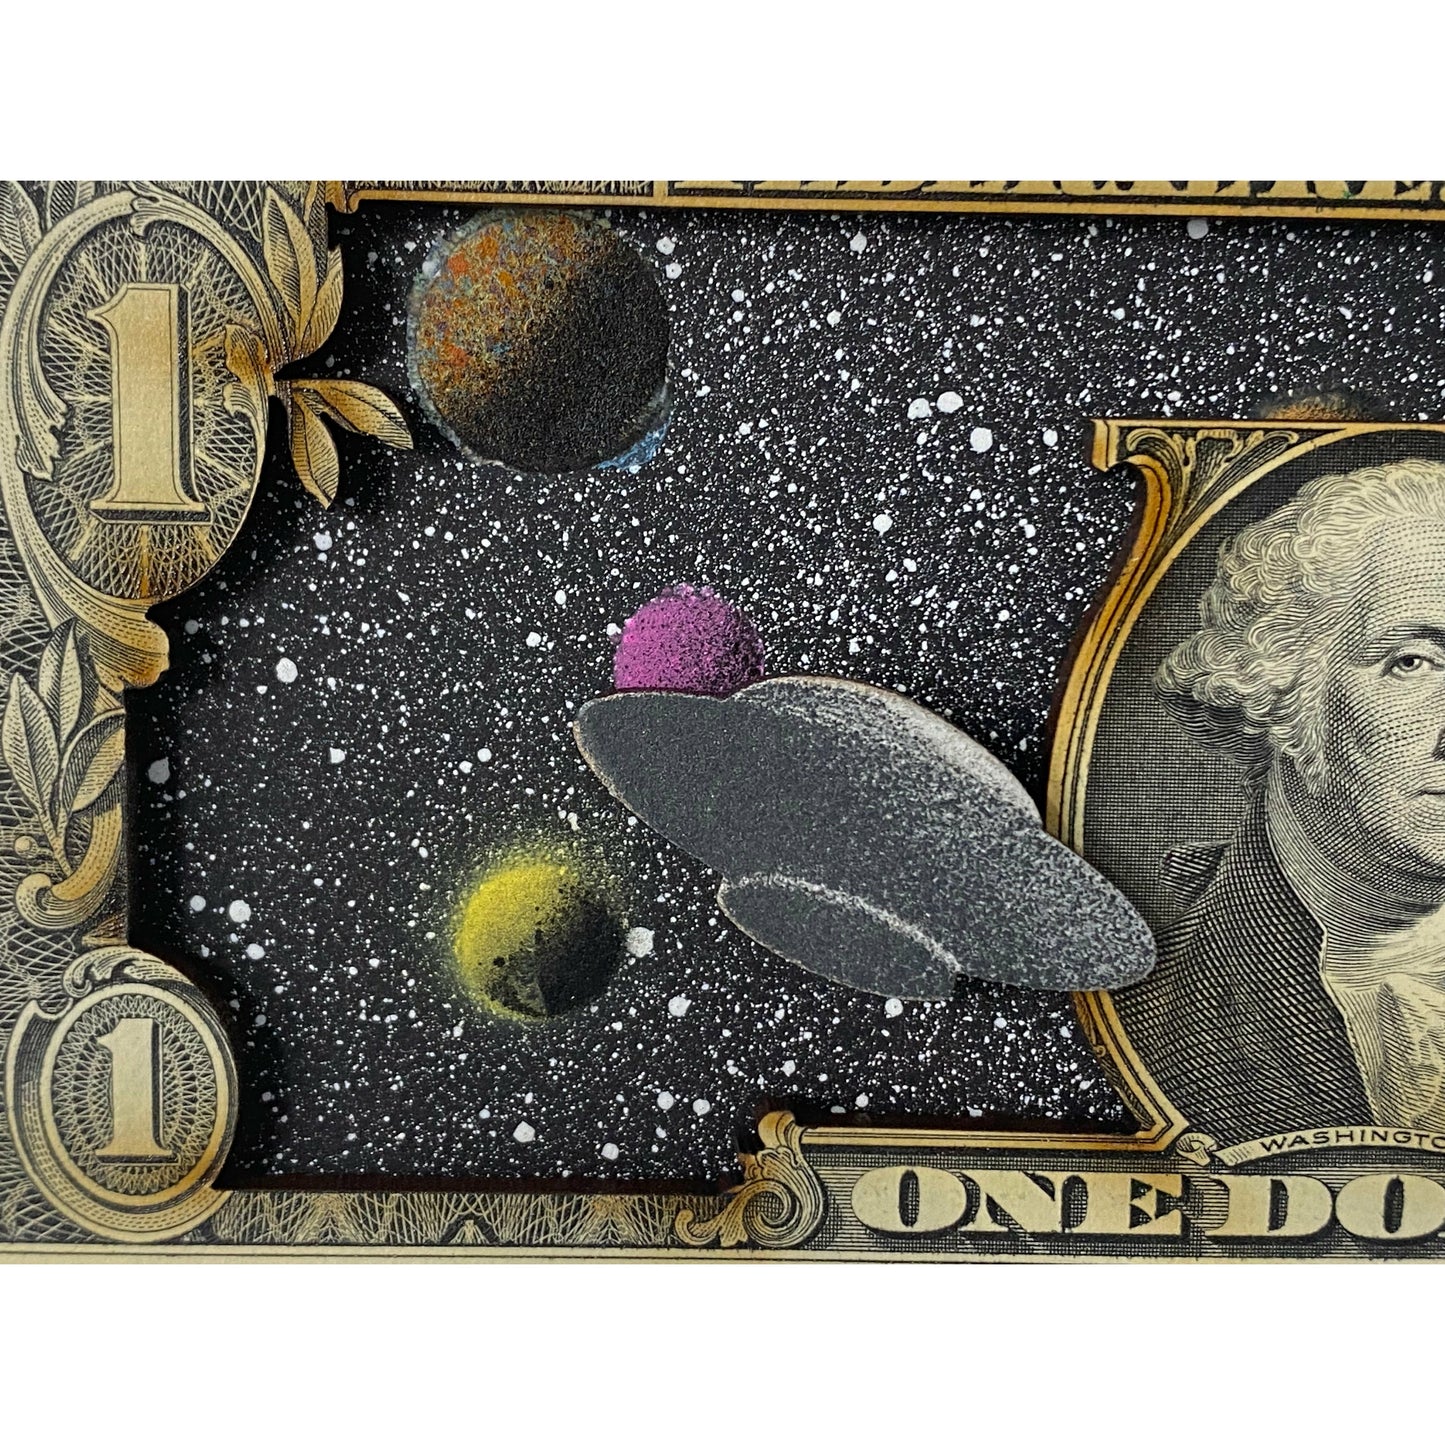 Universal currency 3D edition $1 bill - Smolensky Gallery